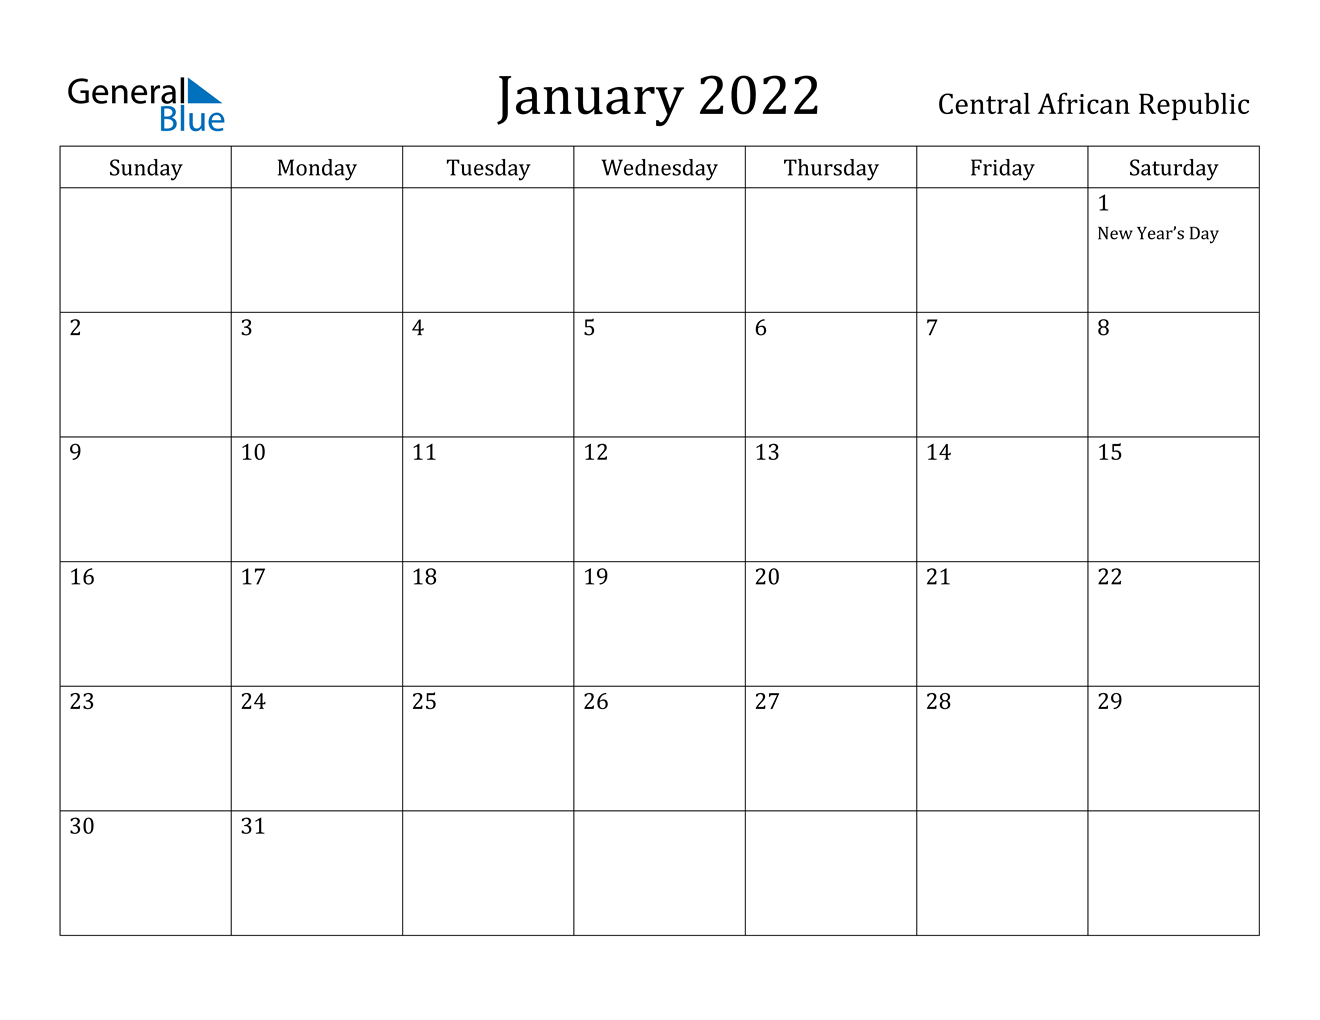 January 2022 Calendar - Central African Republic